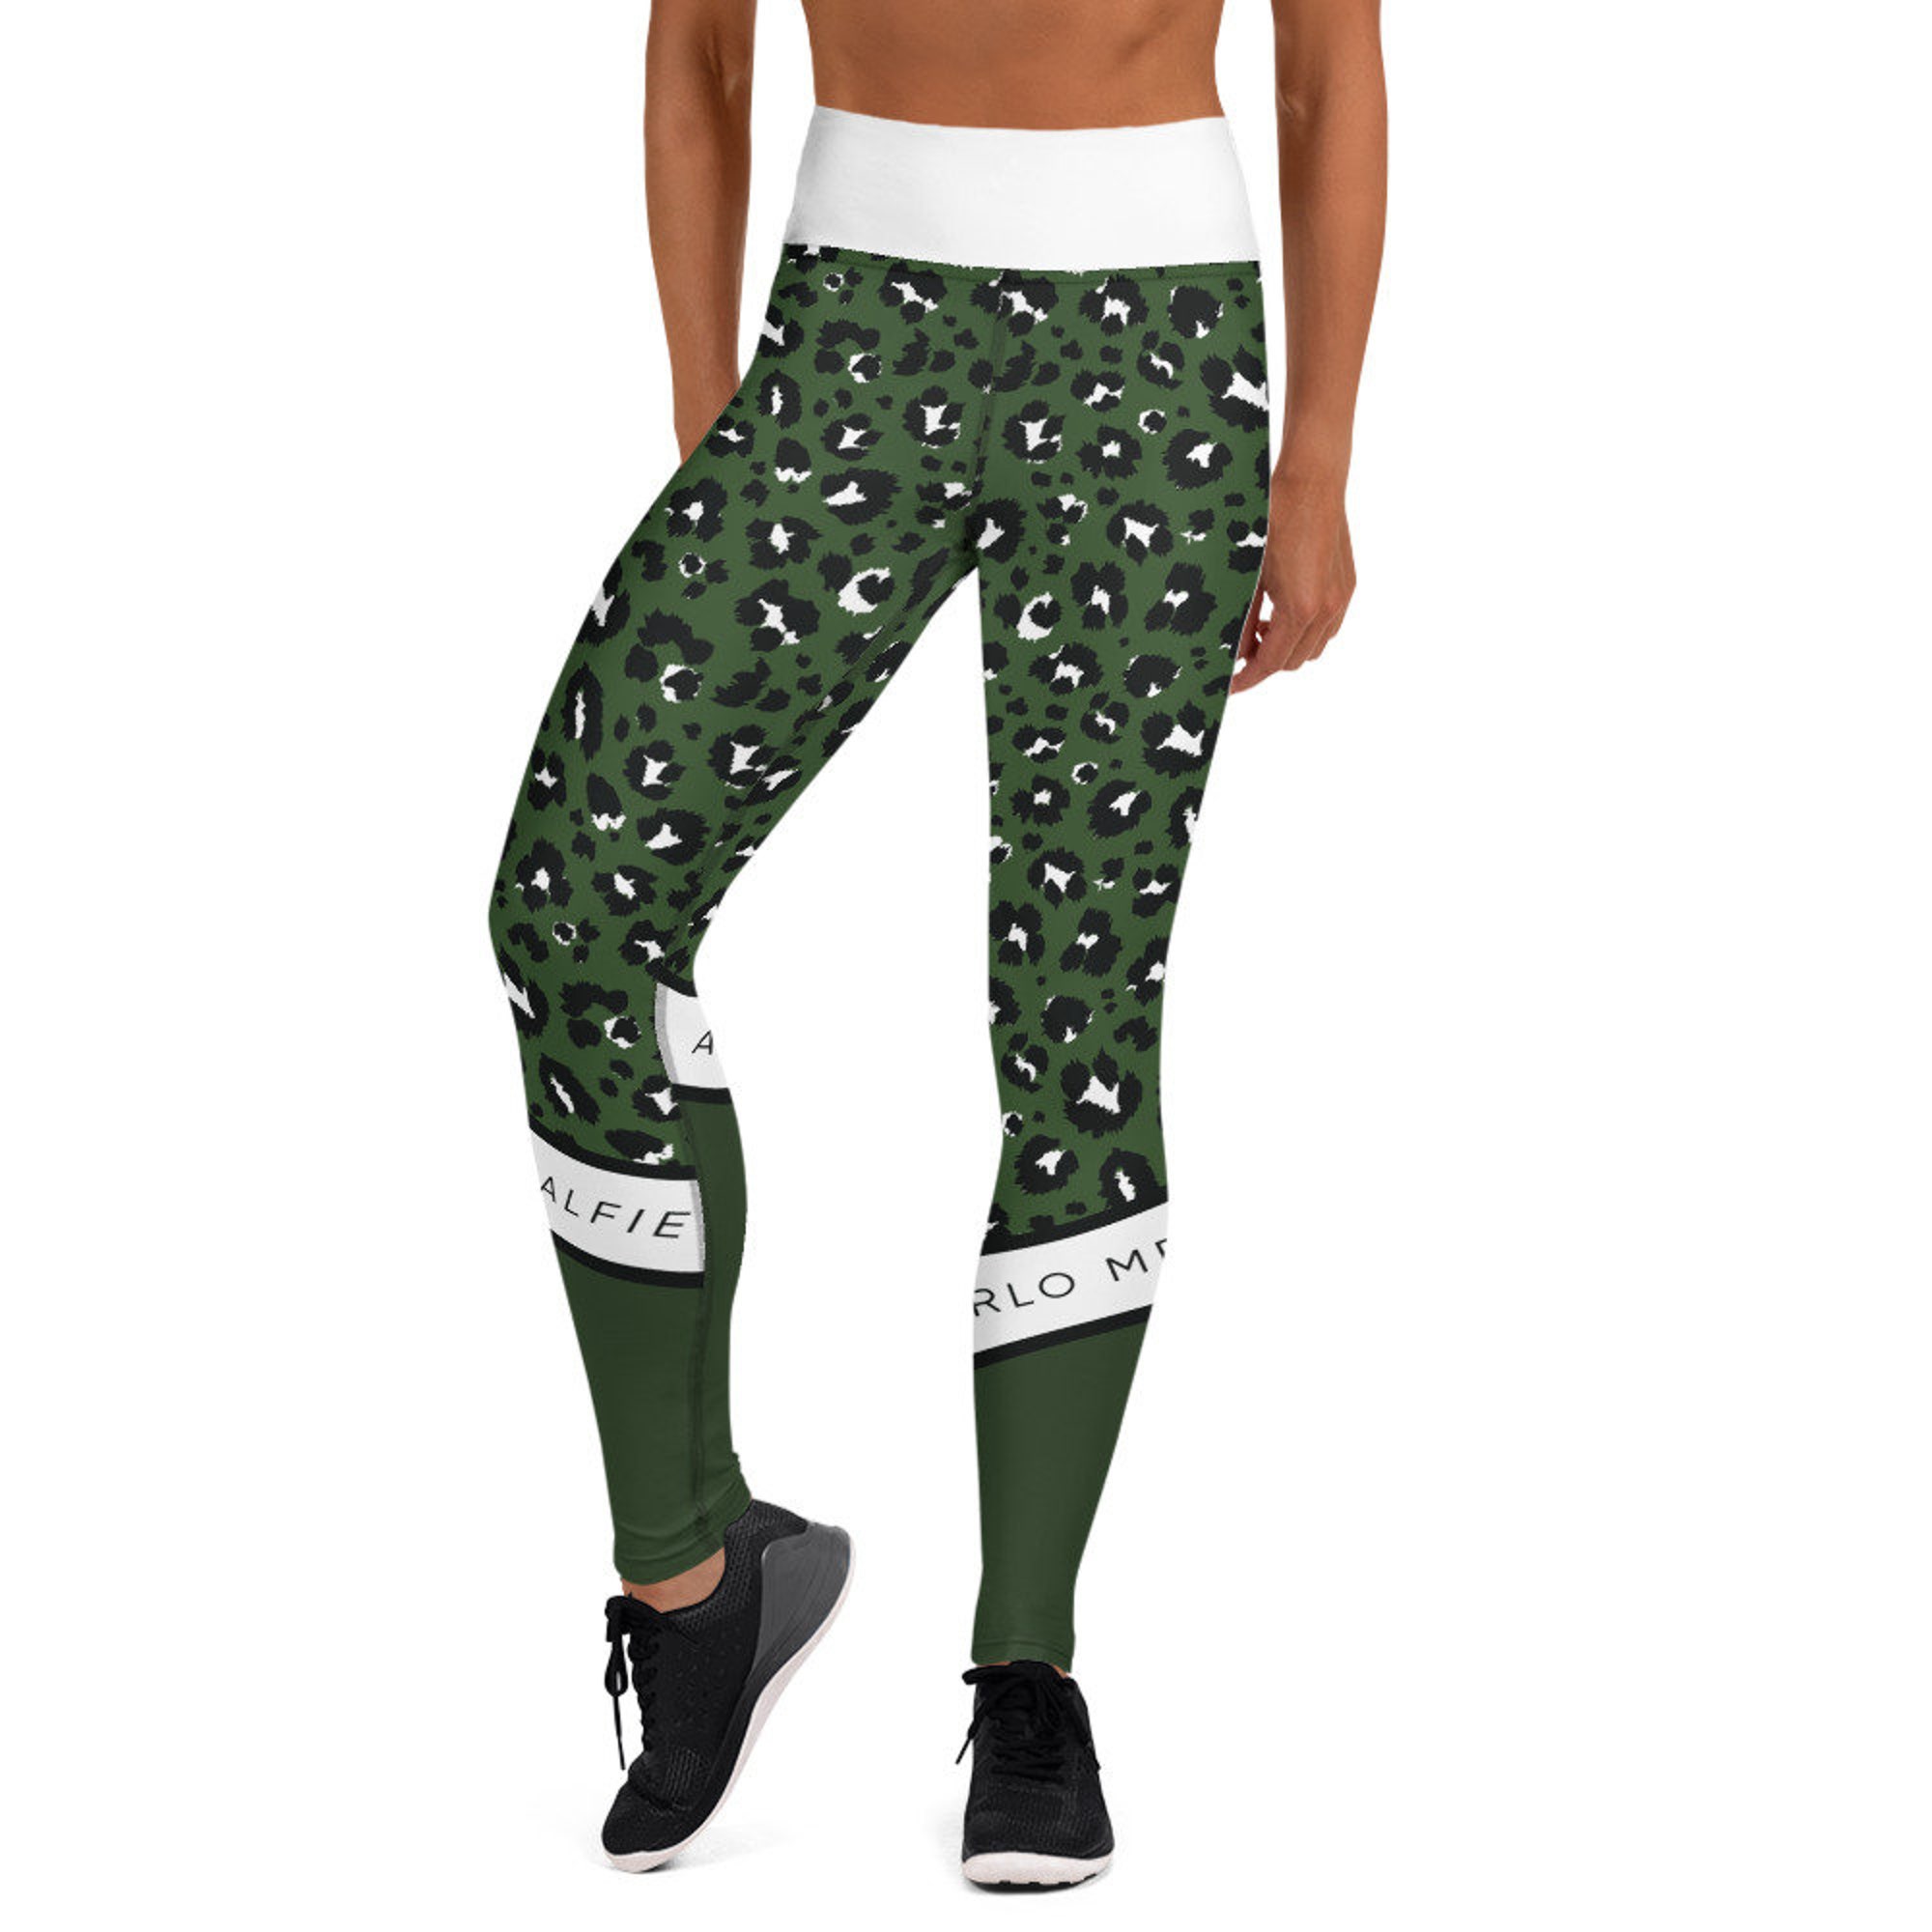 Discover Green Leopard sports leggings